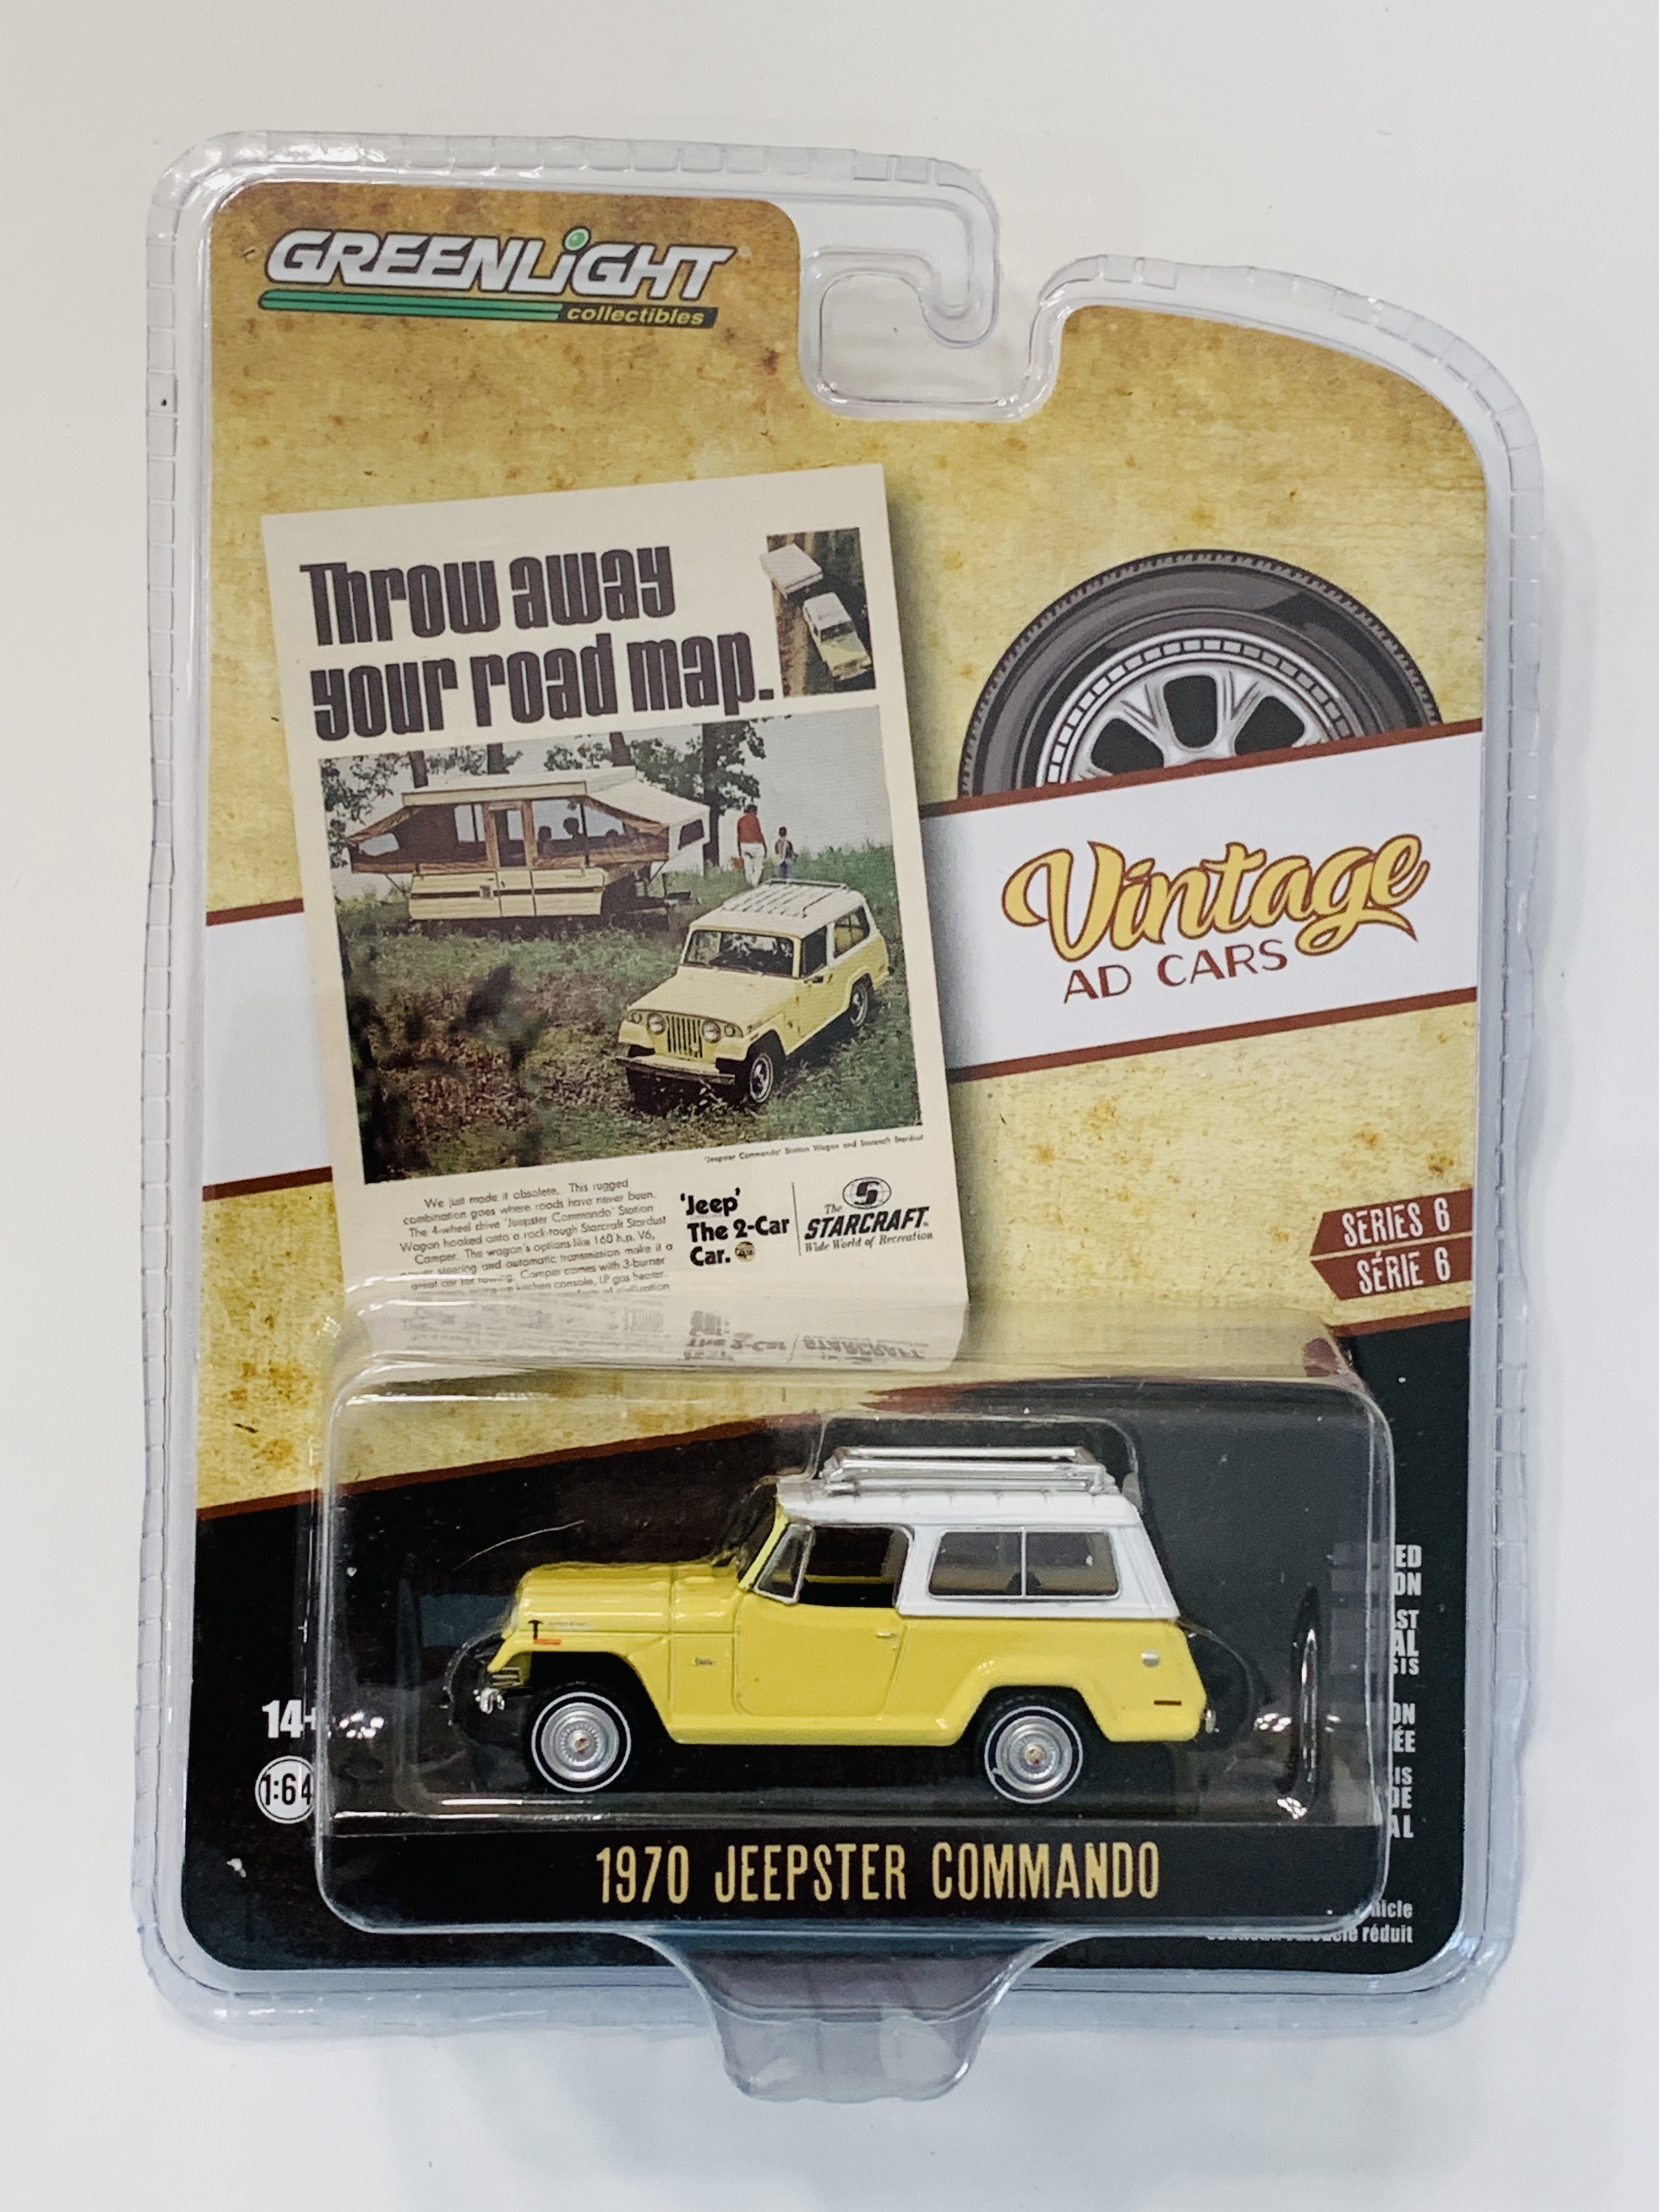 Greenlight Vintage Ad Cars 1970 Jeepster Commando